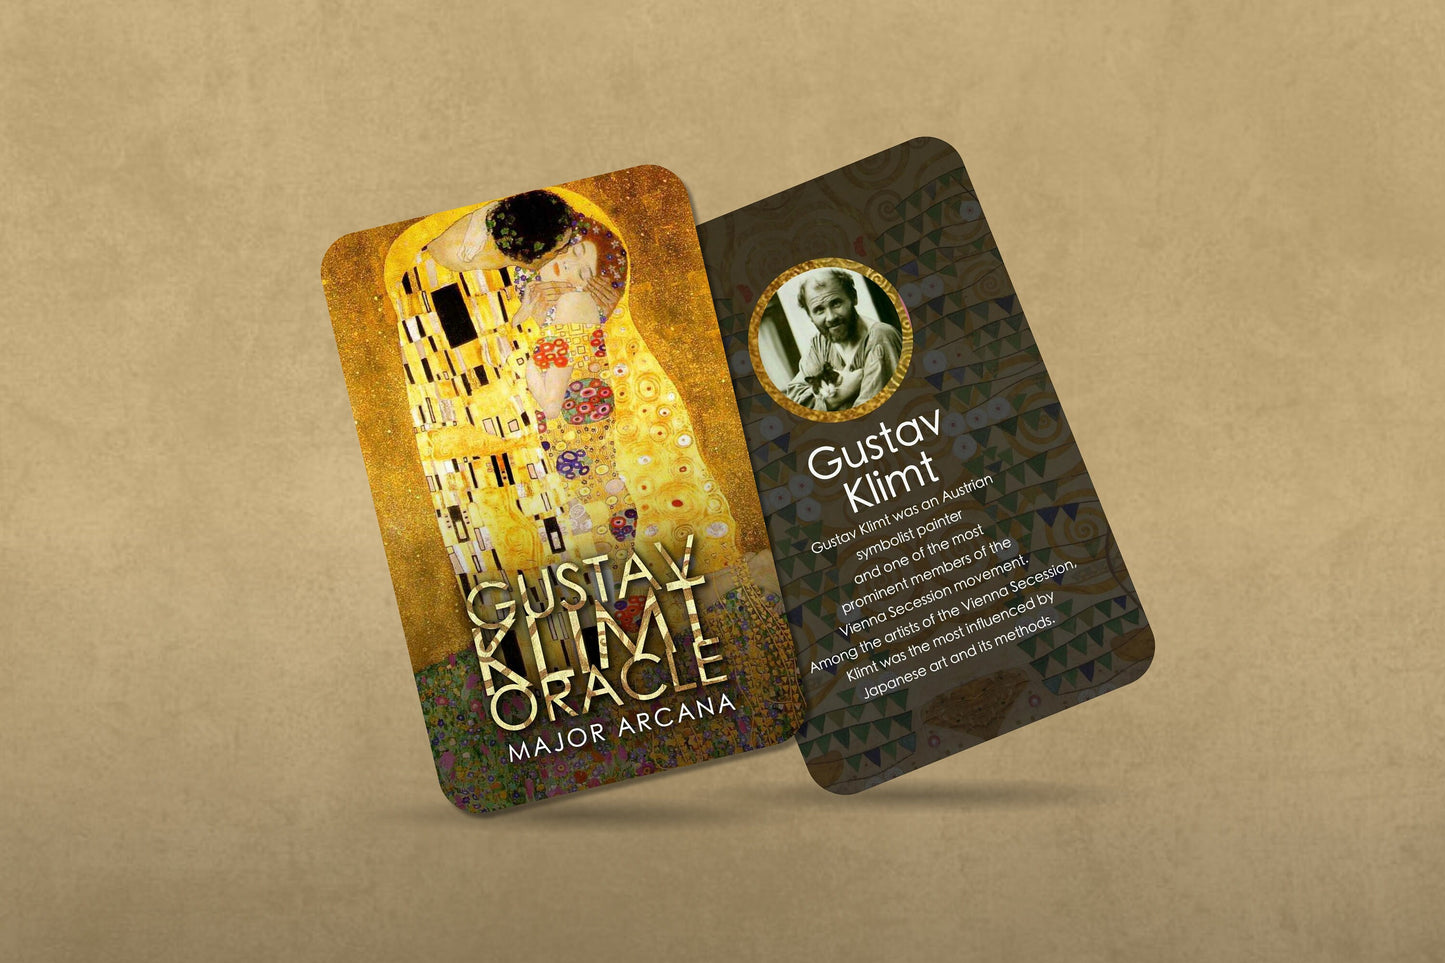 Gustav Klimt Oracle - Major Arcana - Tarot cards